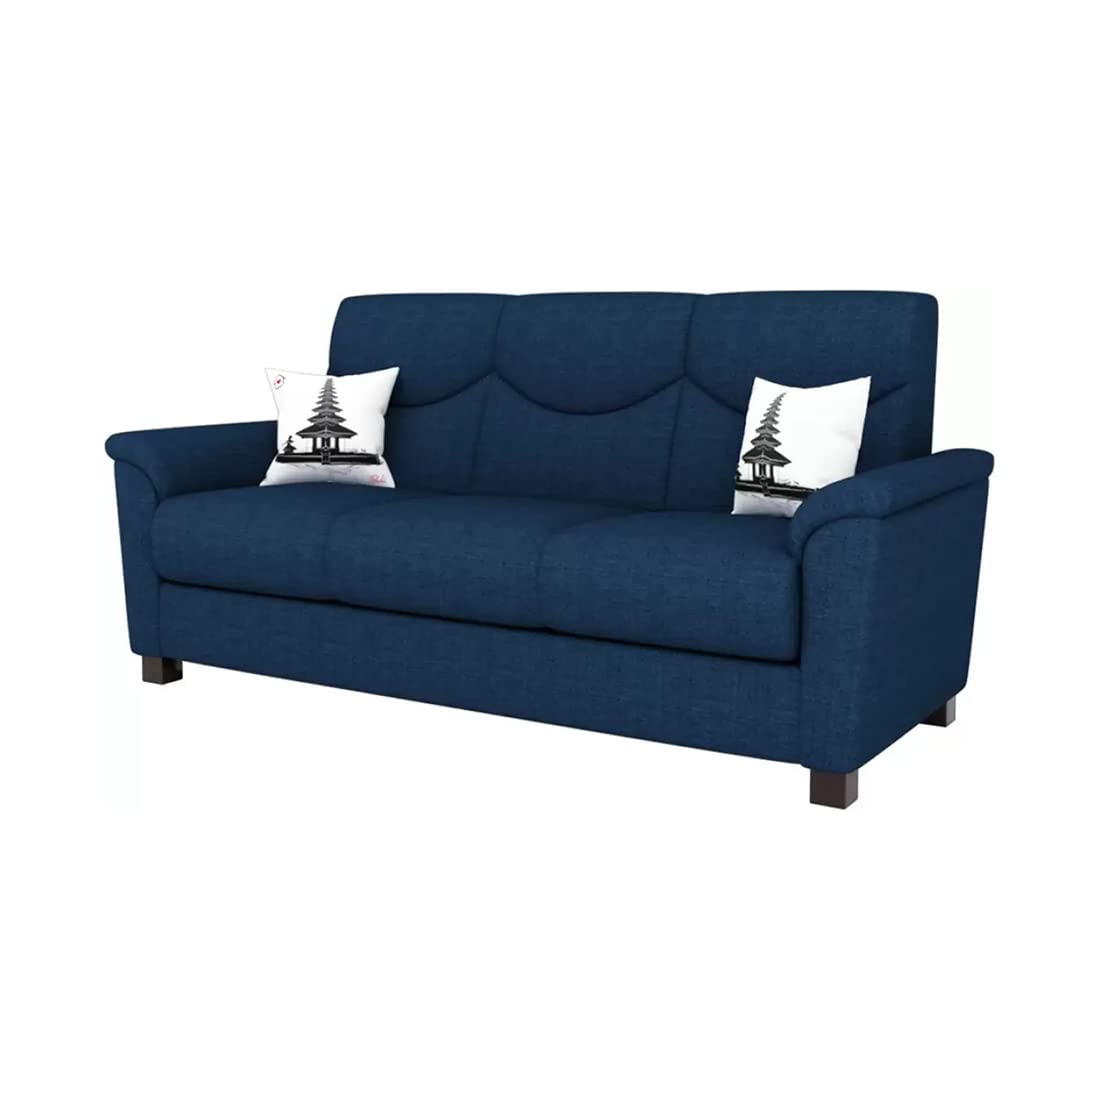 Torque India Nuevo 3 Seater Fabric Sofa | Furniture for Living Room And Office | 3 Seater Fabric Sofa - Torque India